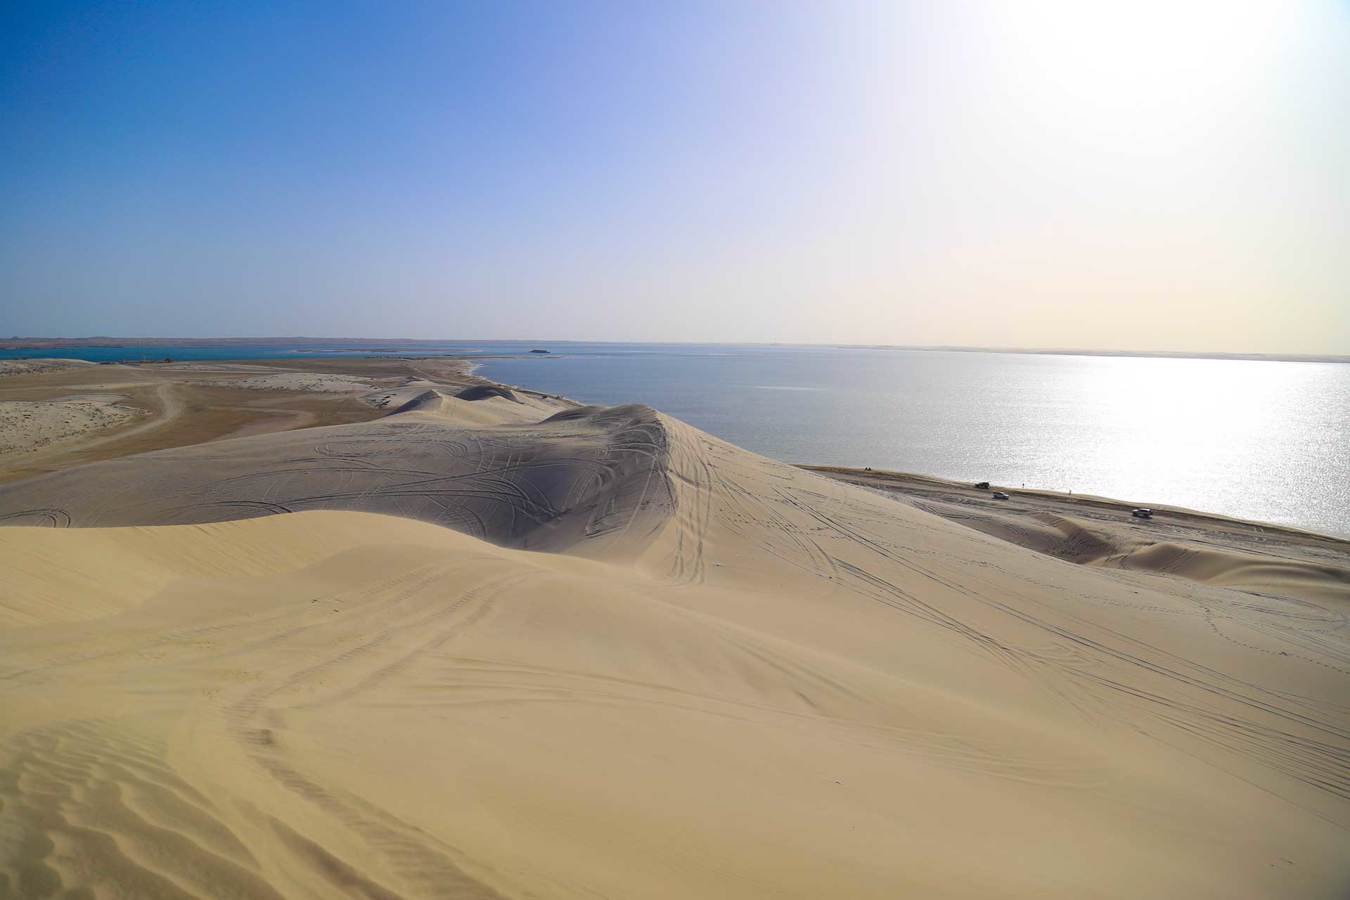 The Desert of Qatar. 